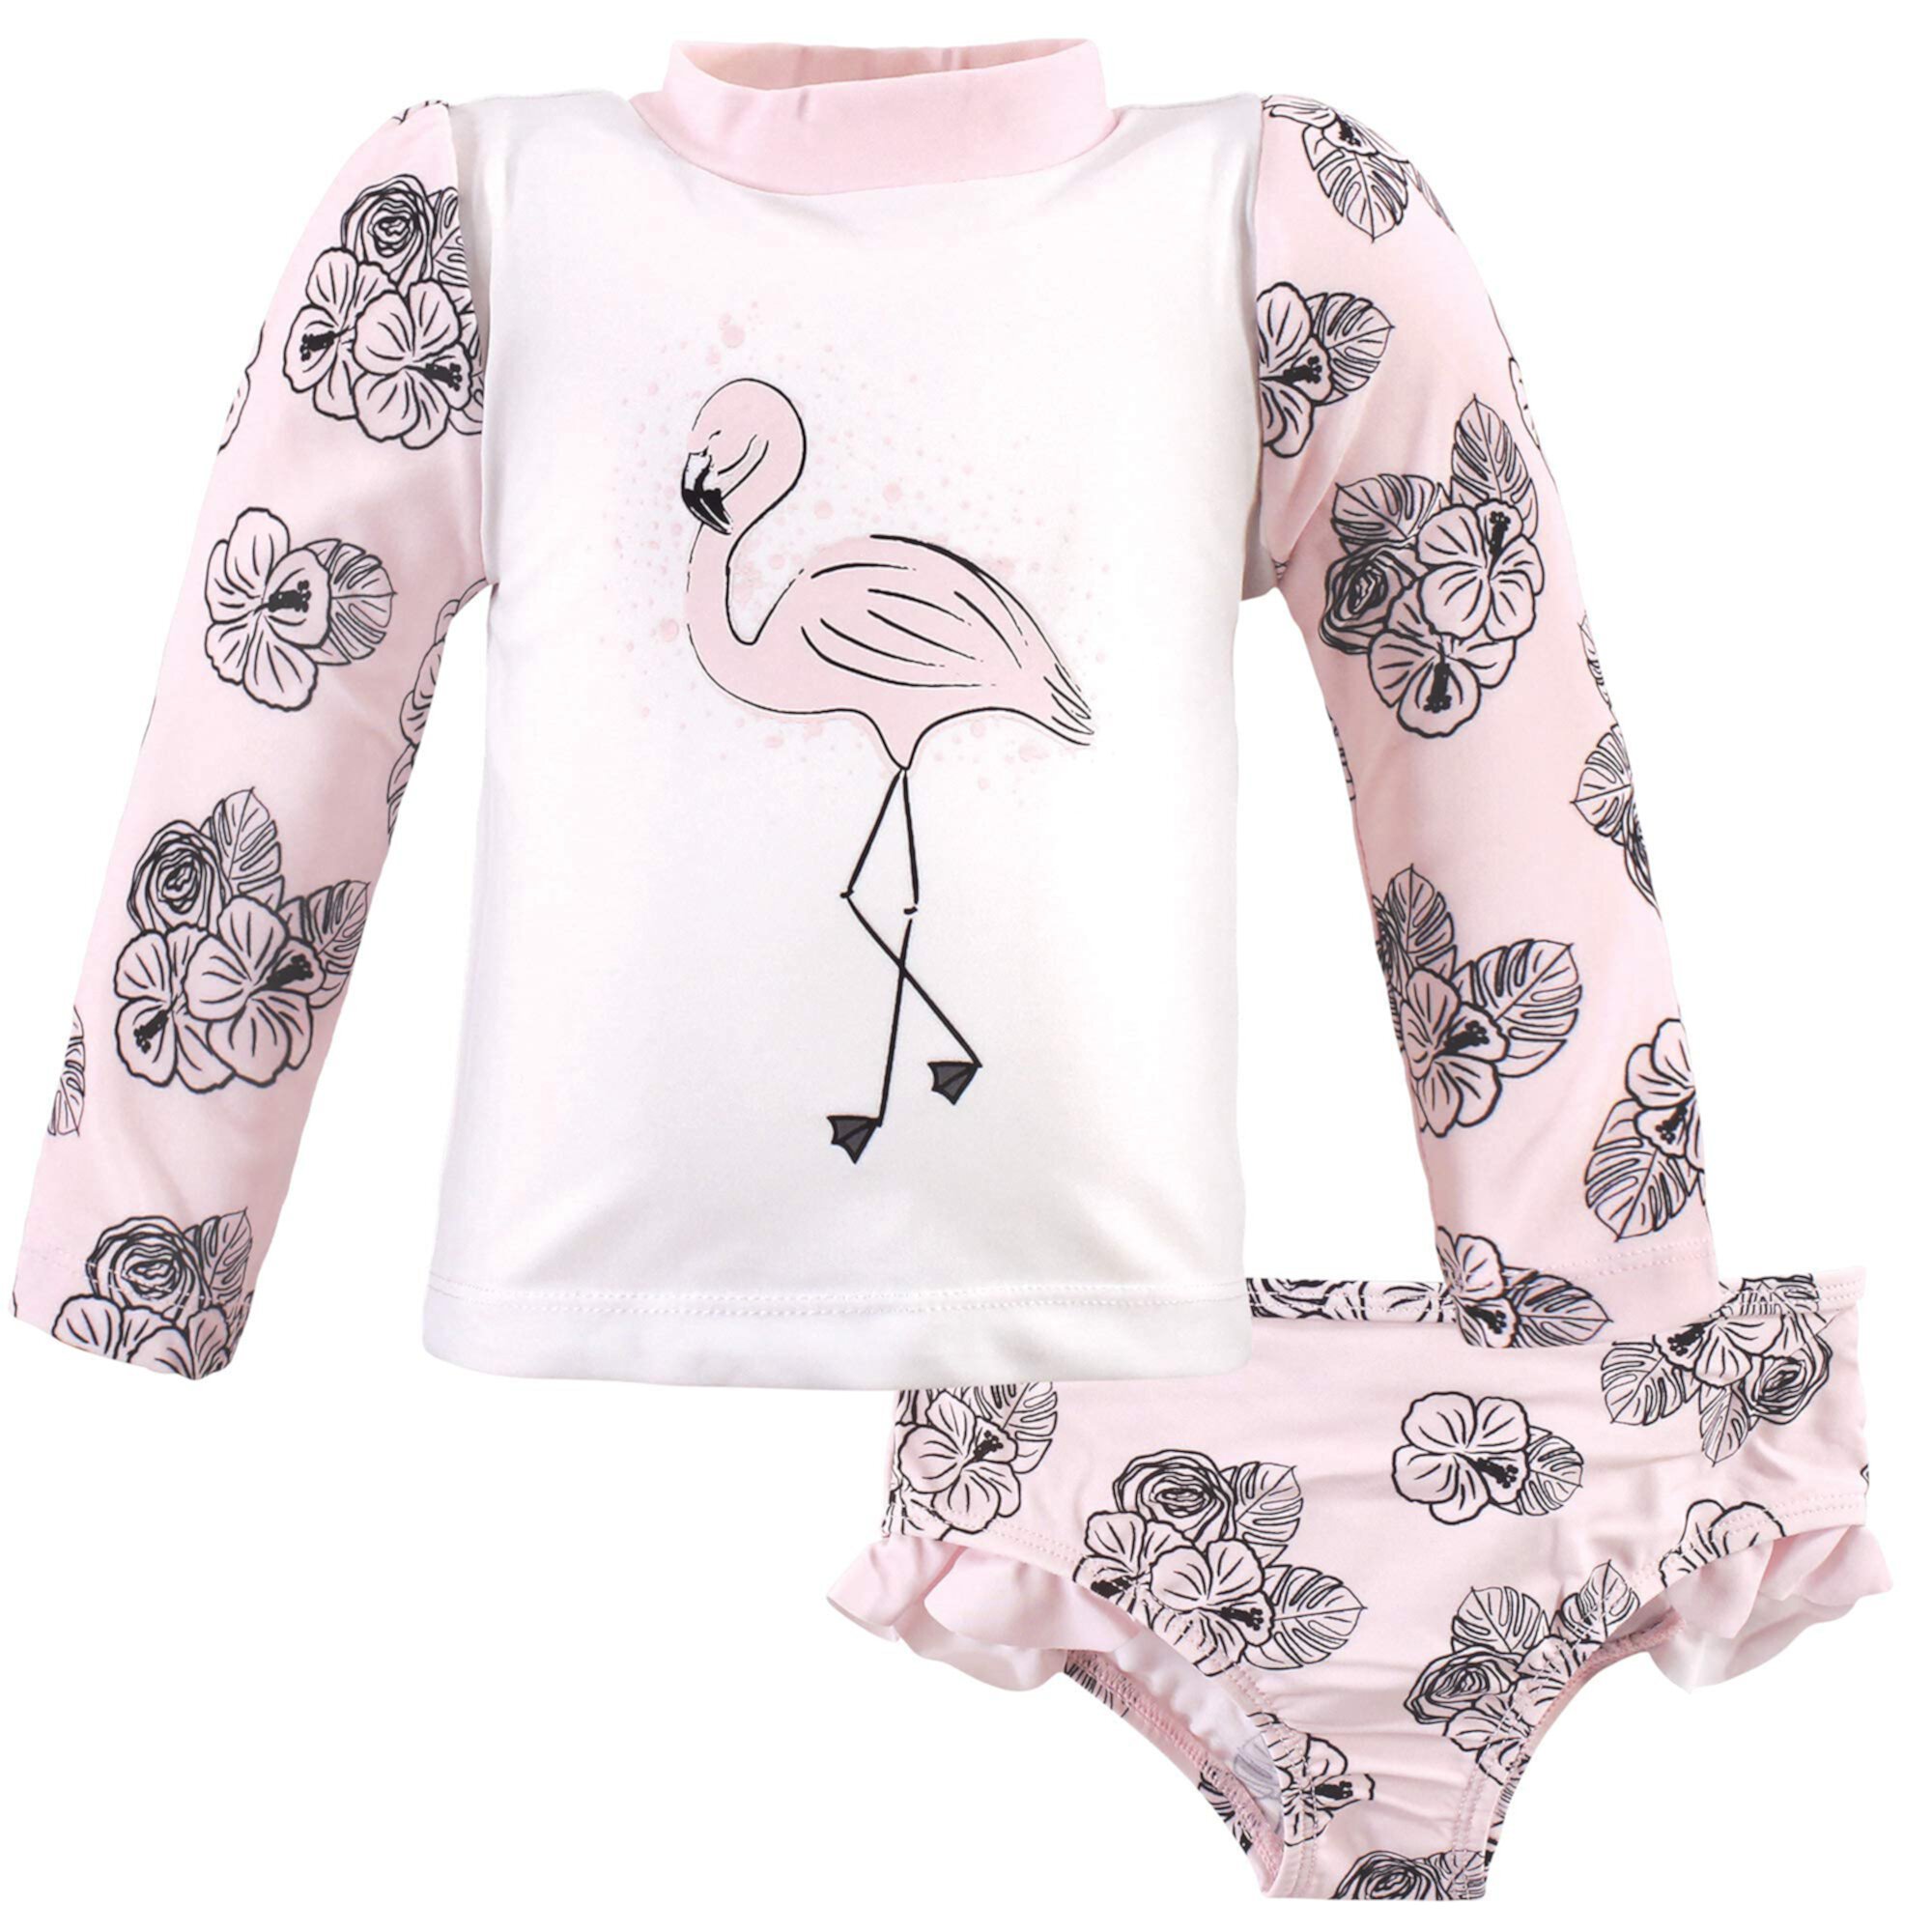 Hudson Baby Unisex Baby Swim Rashguard Set, Цветочный фламинго, для 4 детей Hudson Baby